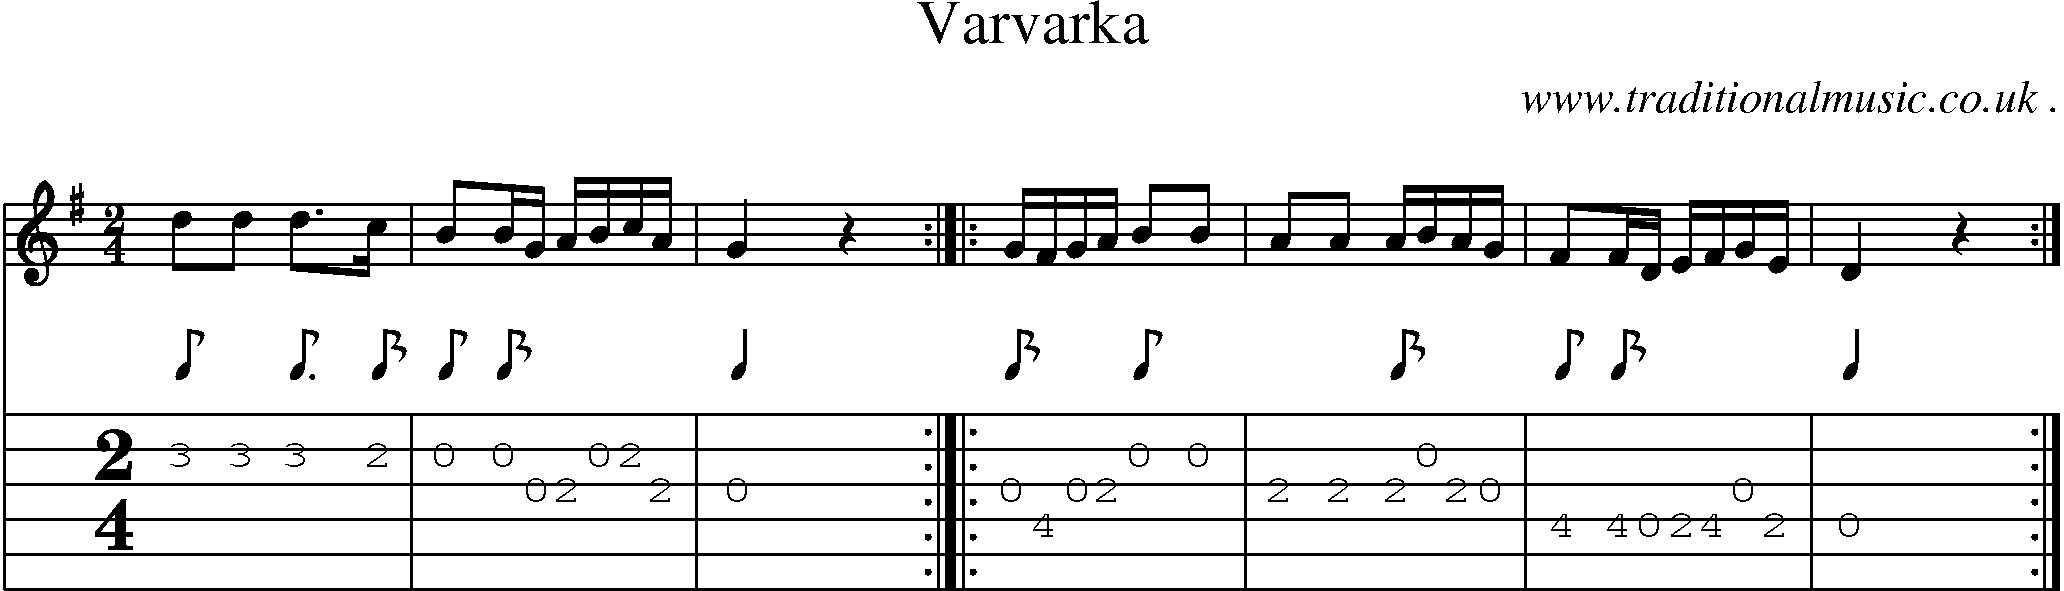 Sheet-Music and Guitar Tabs for Varvarka